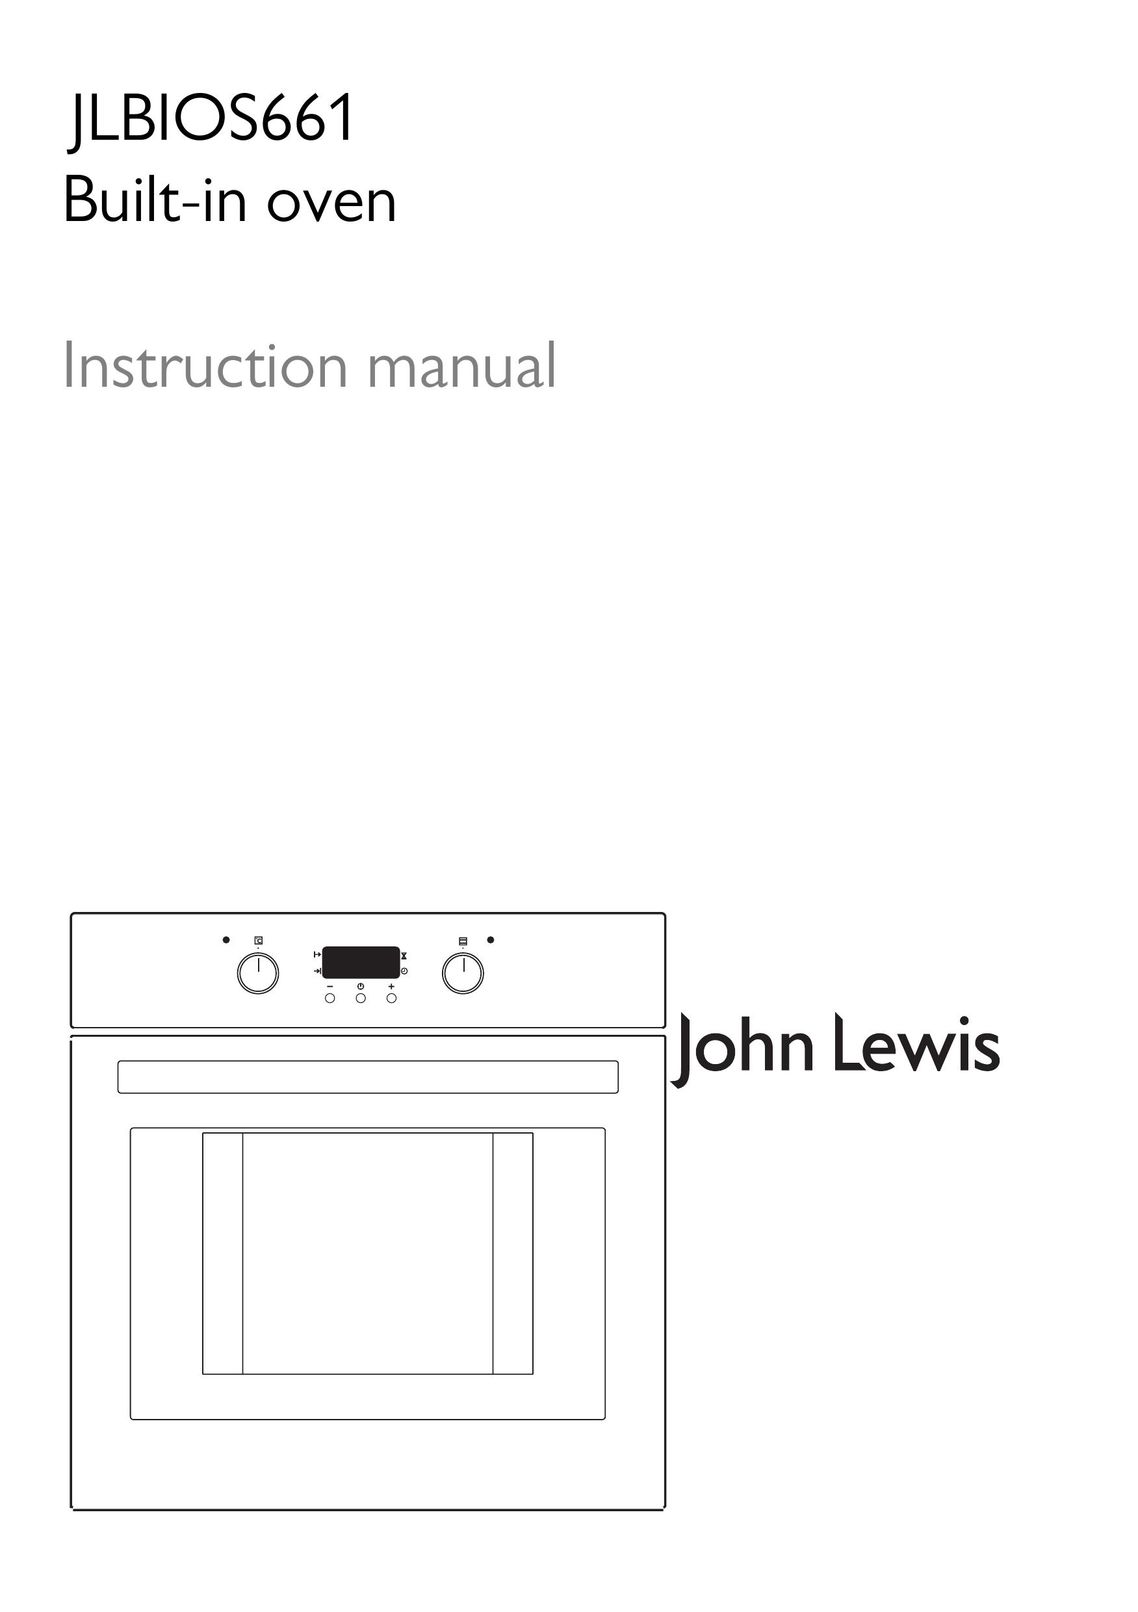 John Lewis JLBIOS661 Convection Oven User Manual